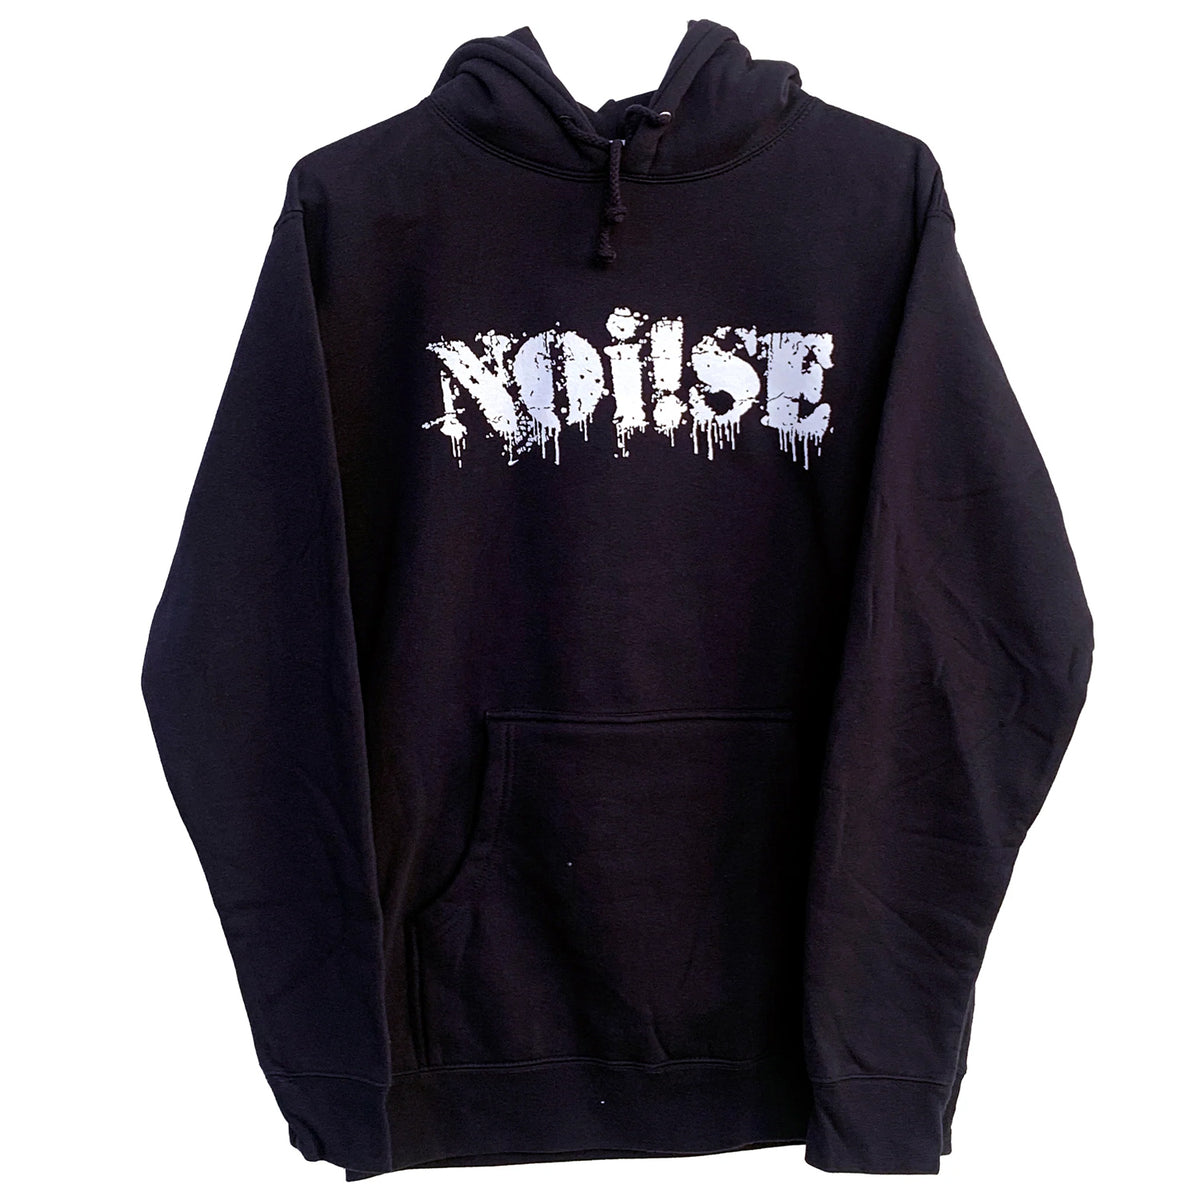 NOi!SE - Logo - White On Navy Blue - Hooded Sweatshirt